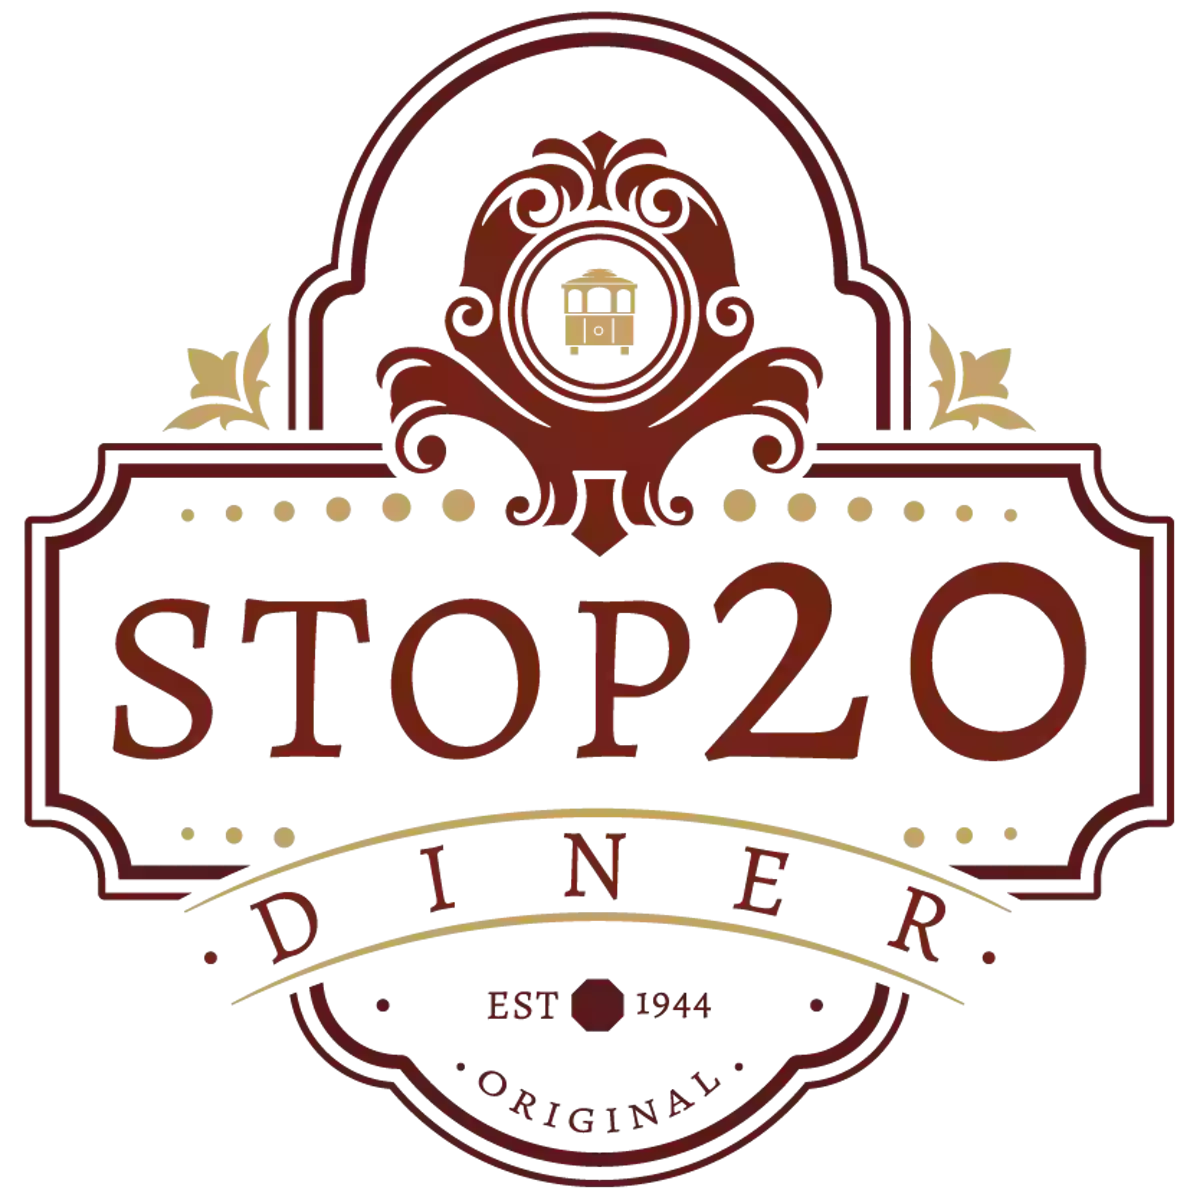 Stop 20 Diner